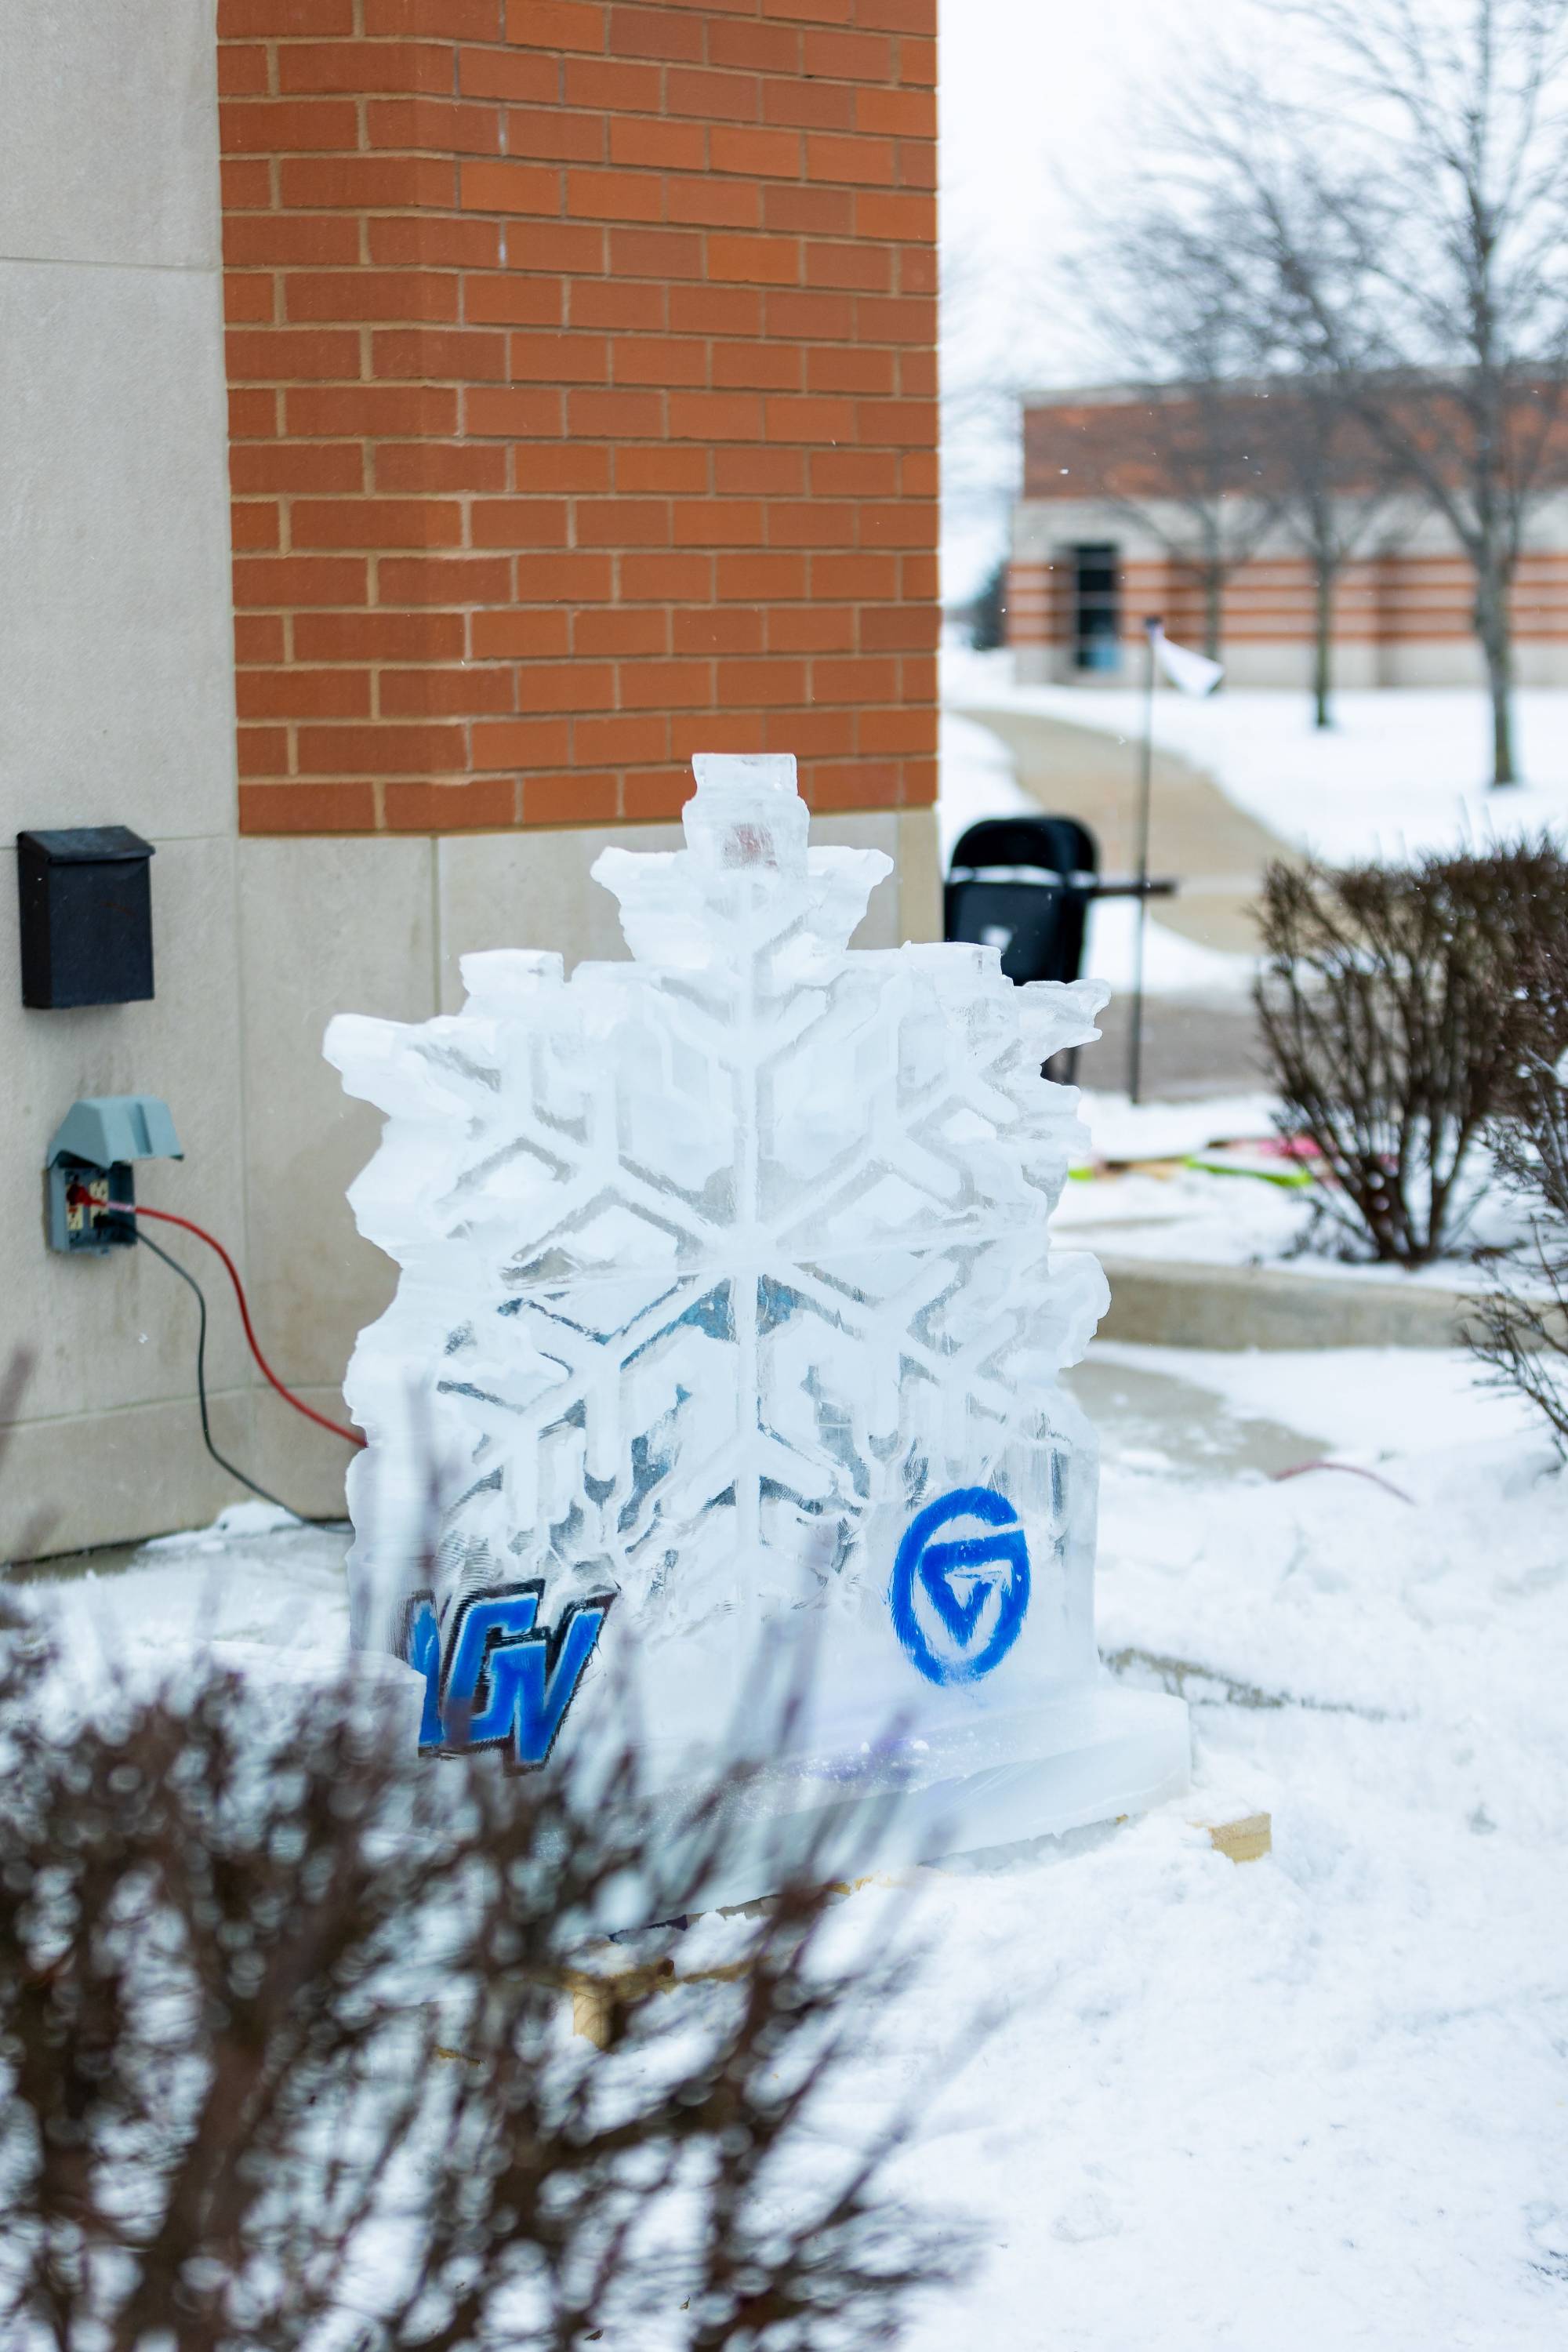 Snowflake ice sculpture with two GVSU logos